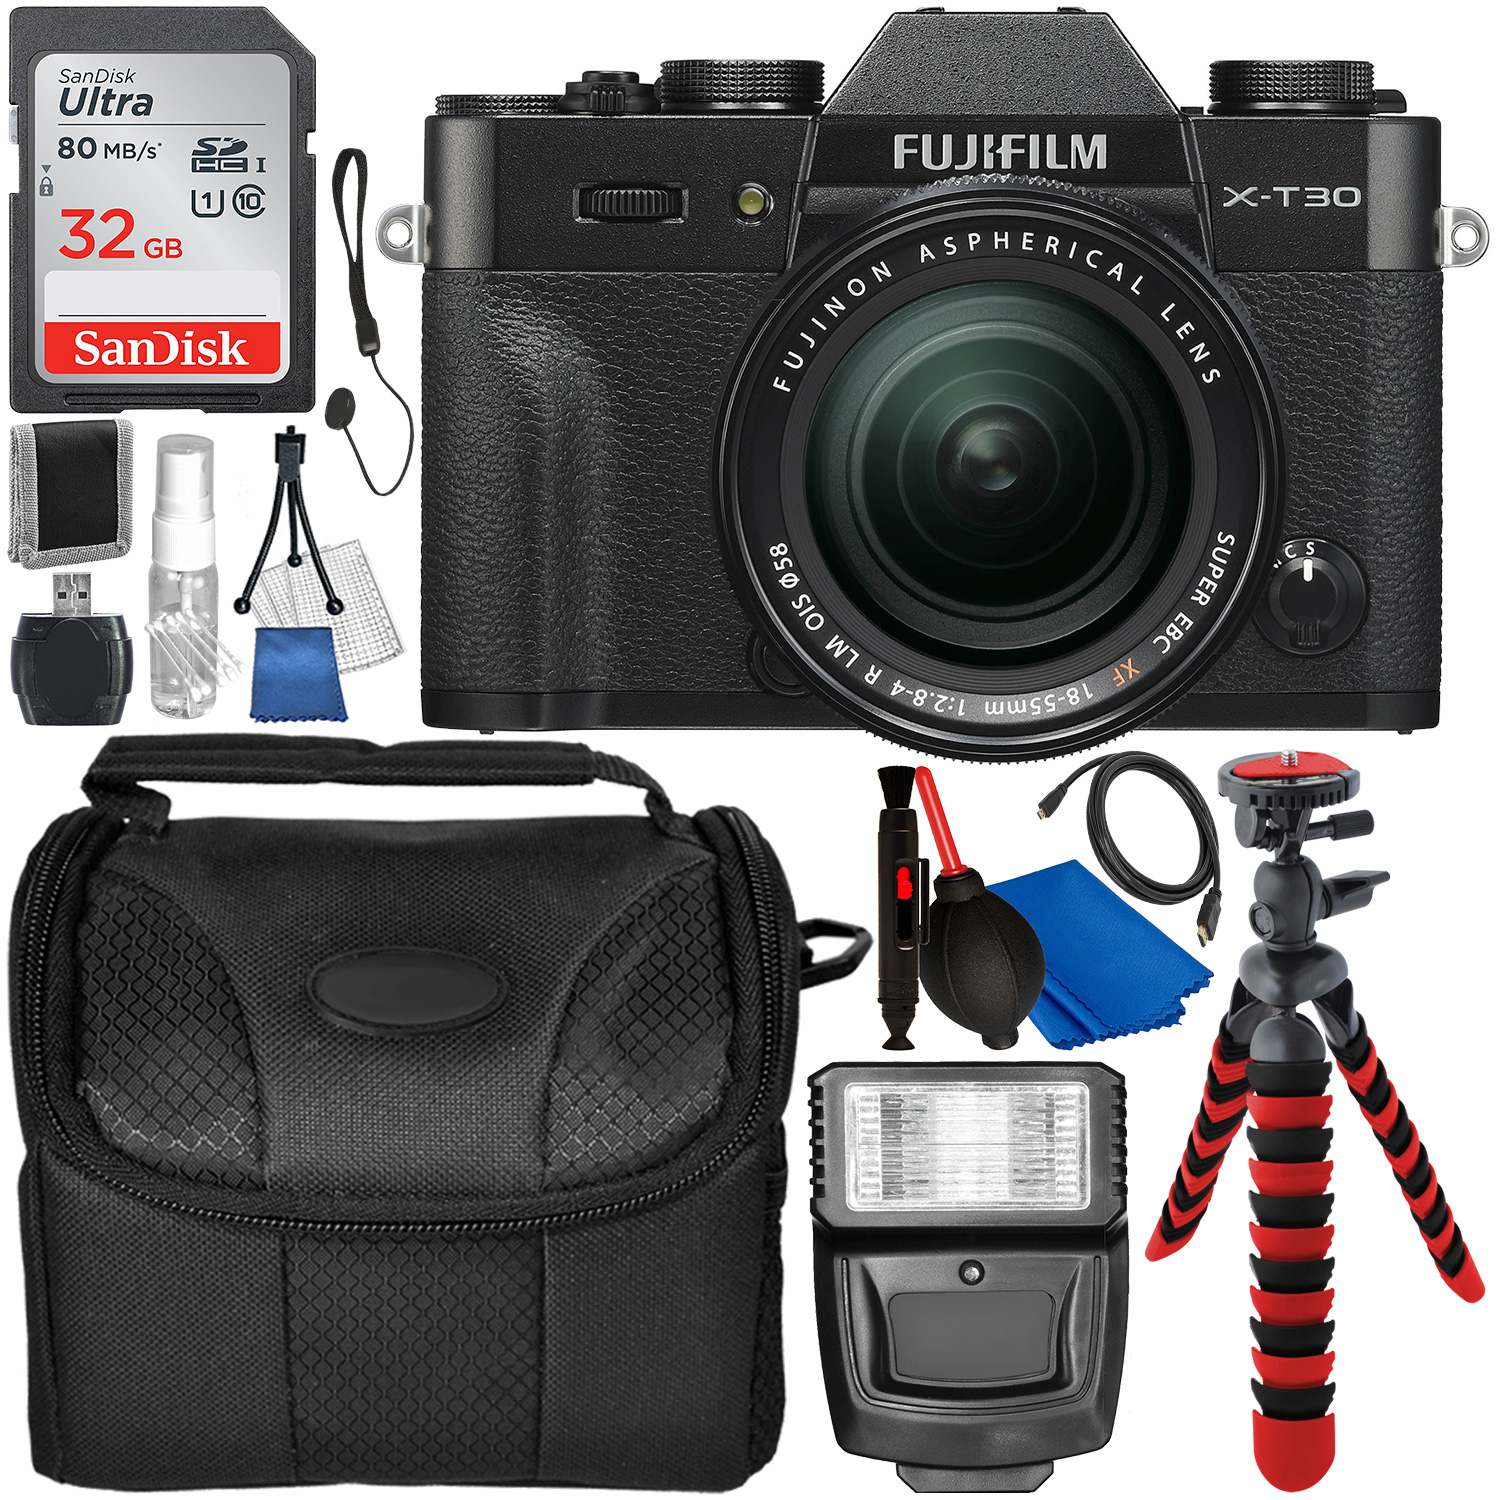 FUJIFILM X-T30 Mirrorless Digital Camera with 18-55mm Lens (Black) and Accessory Bundle